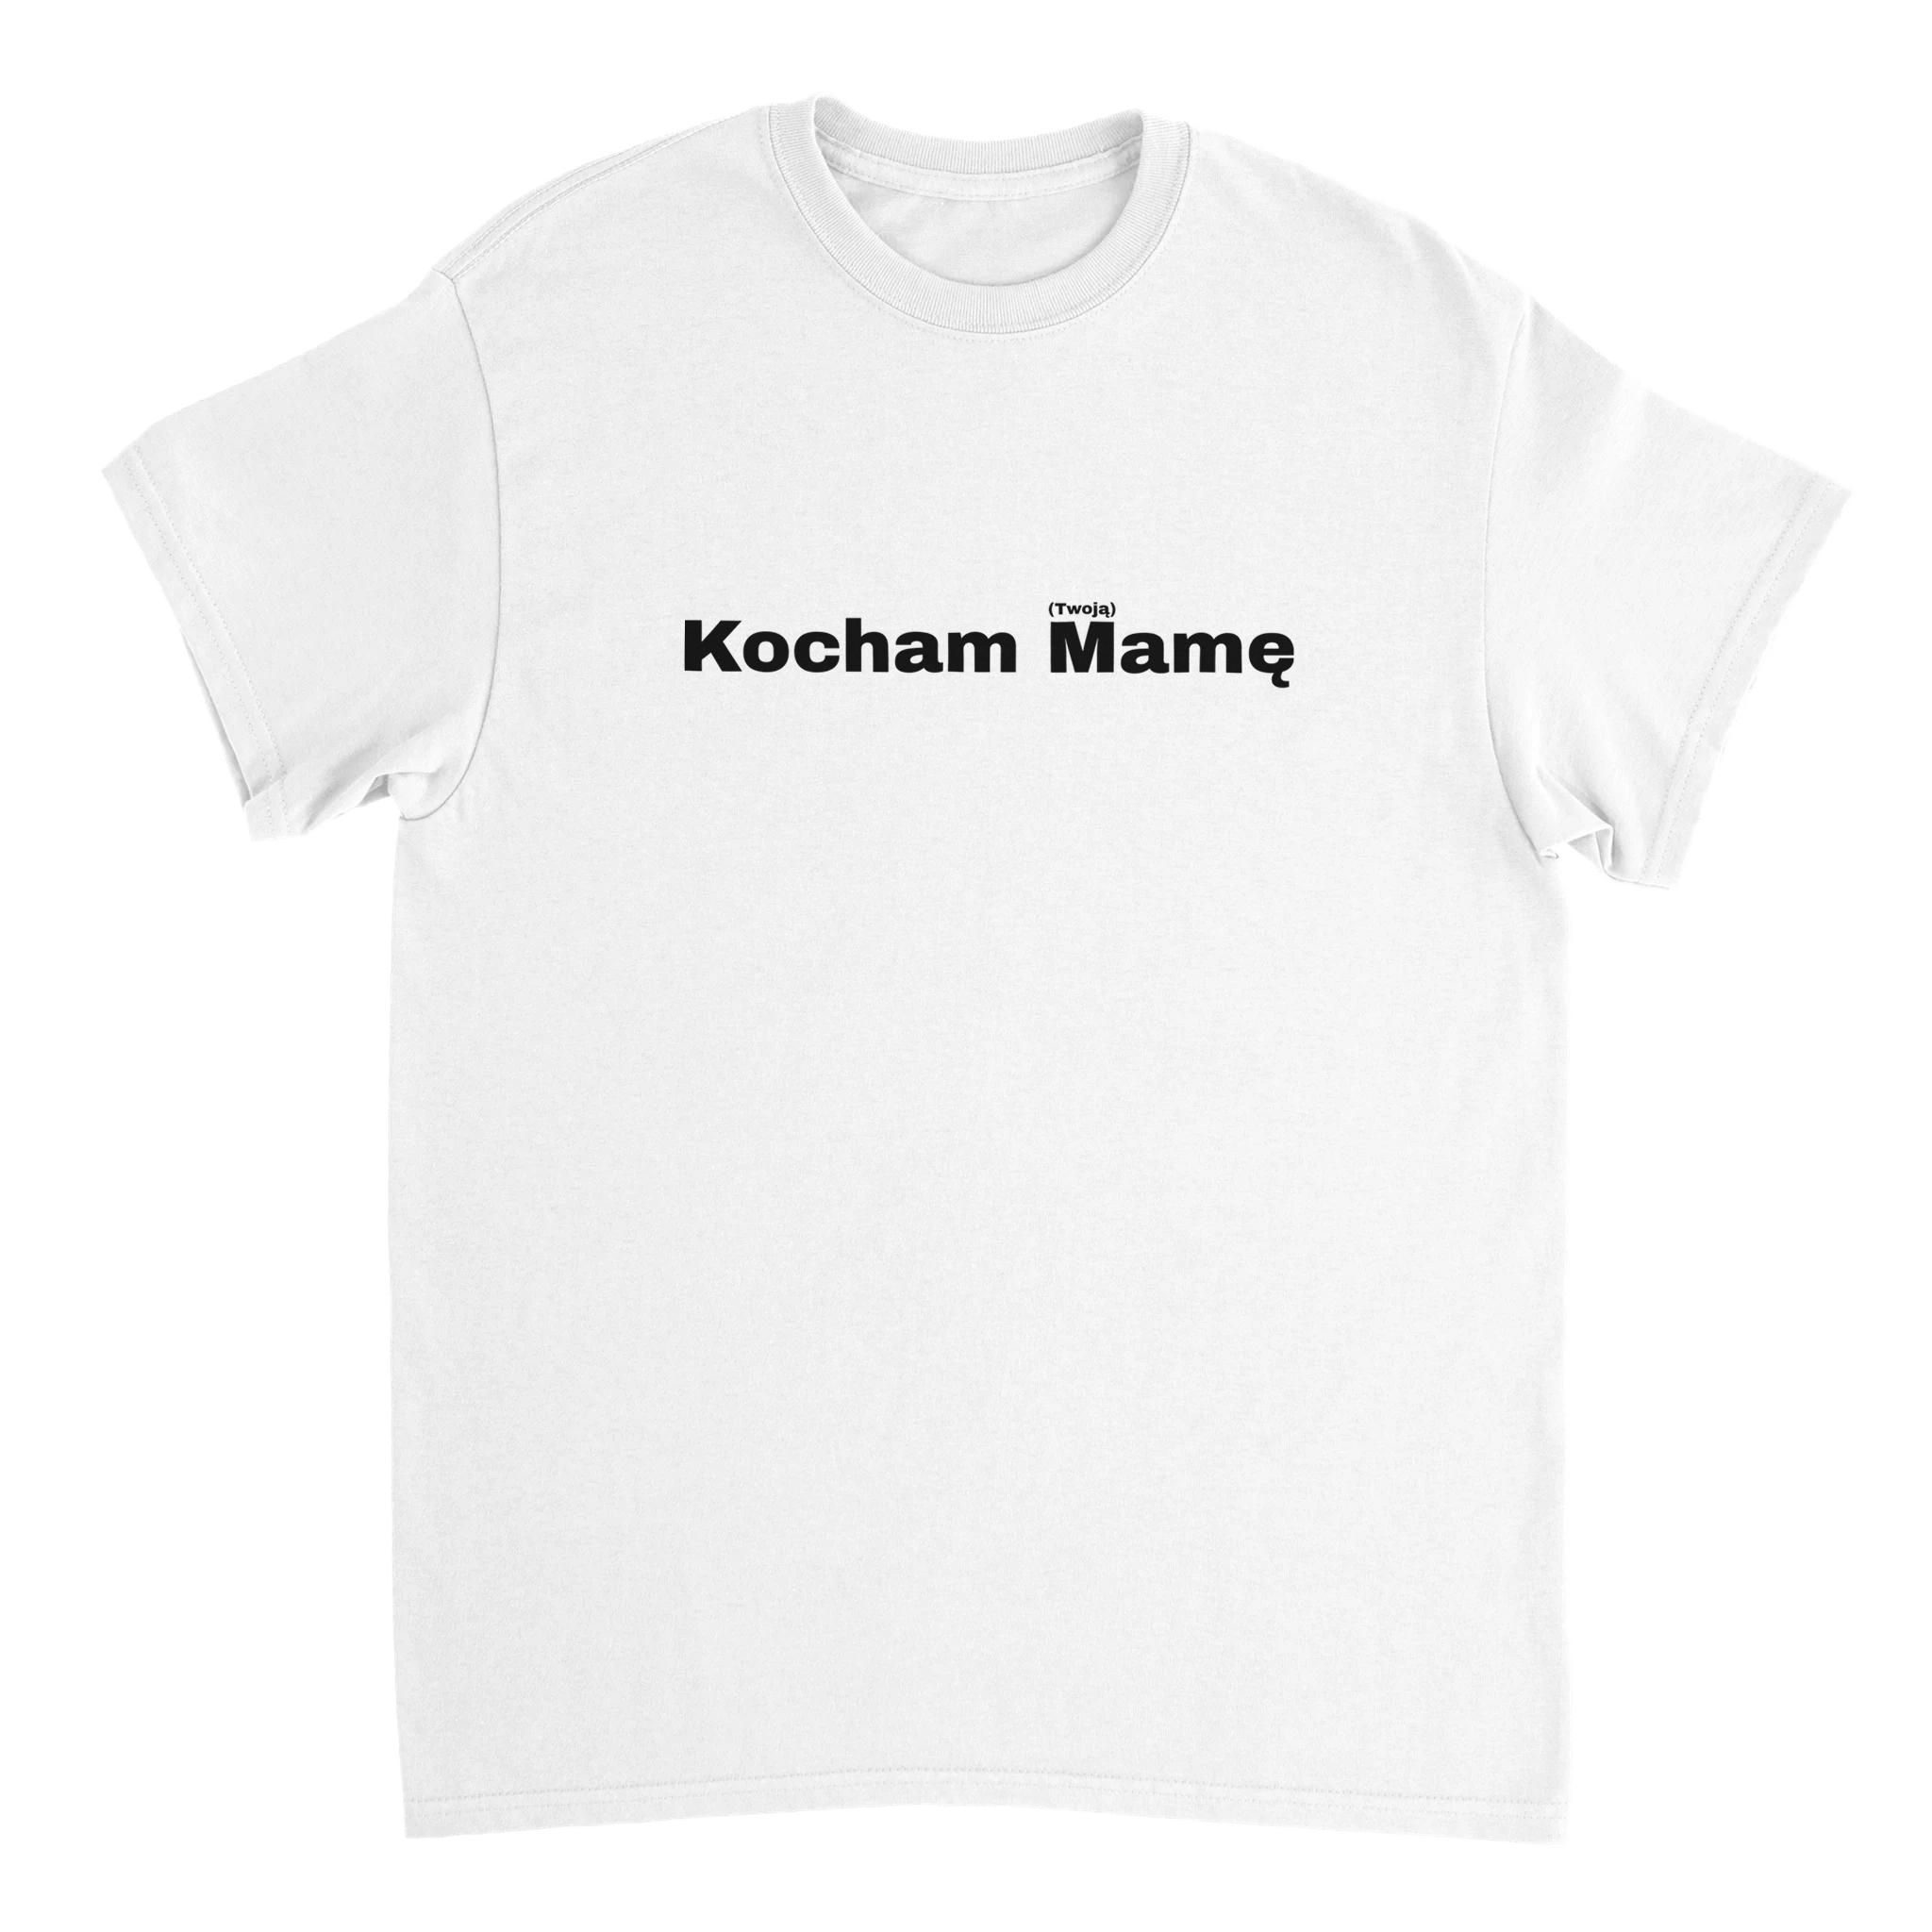 Kocham Mamę (Twoją) T-shirt